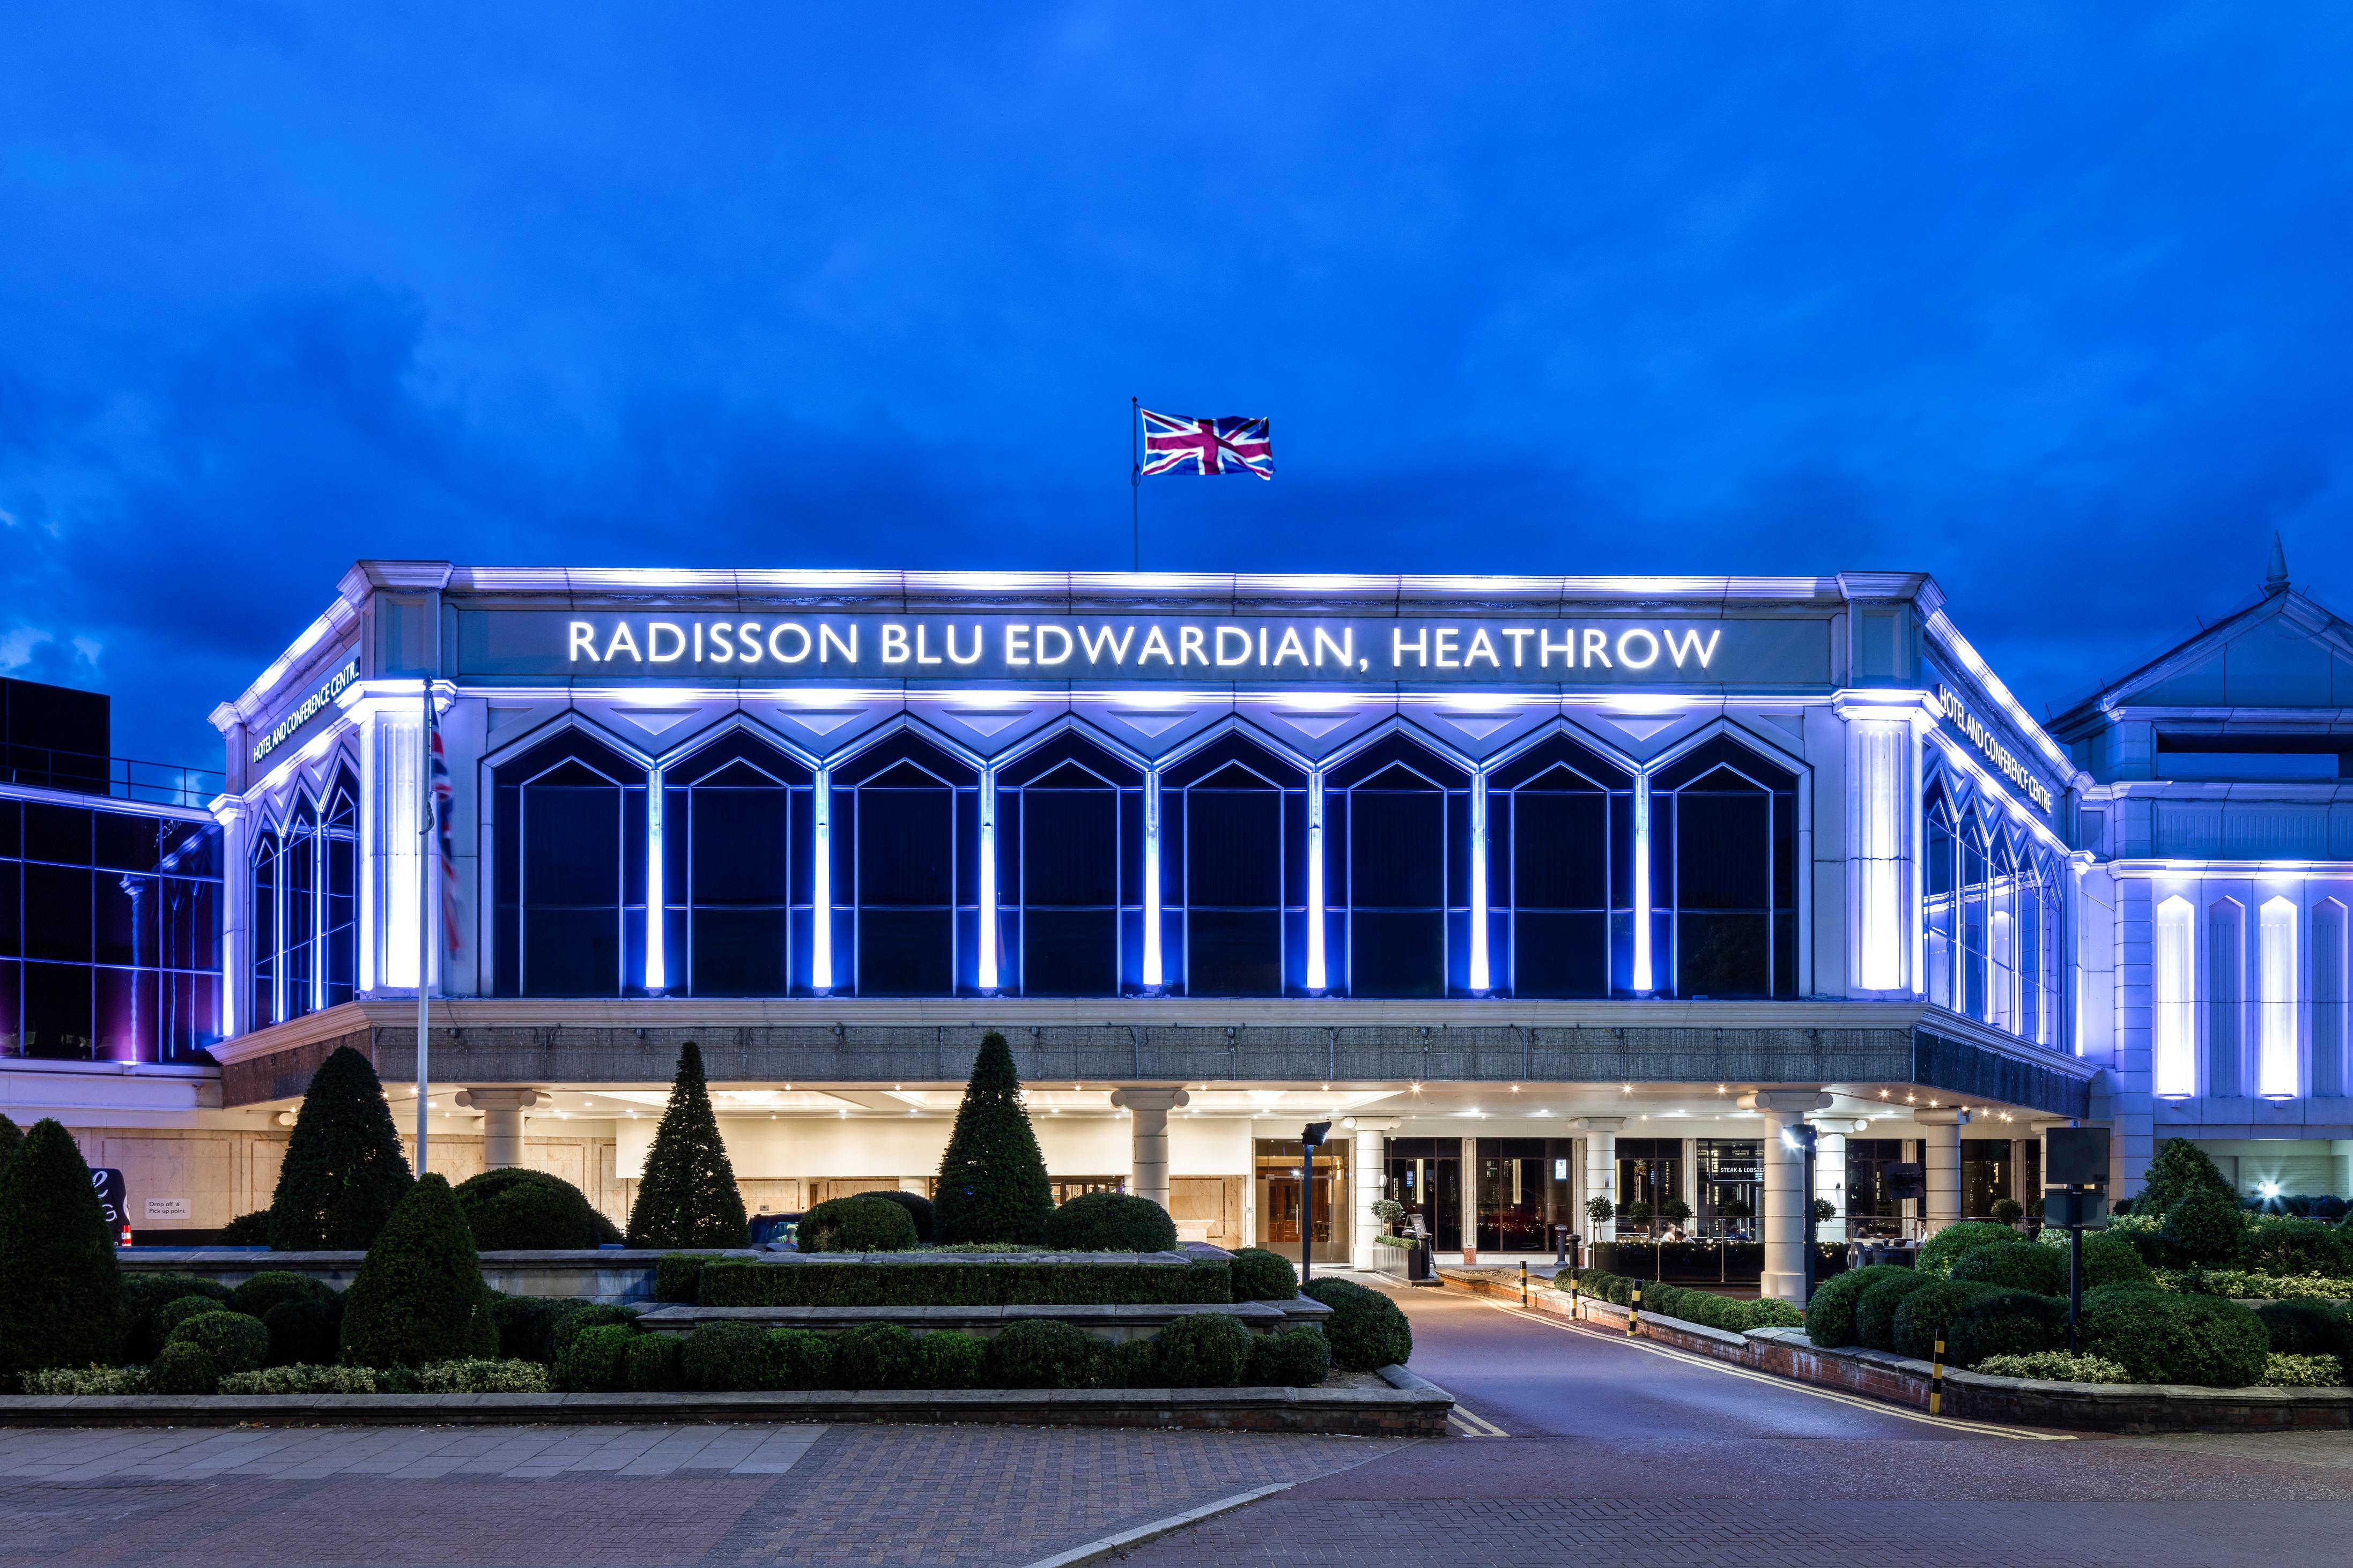 Images Radisson Blu Edwardian Heathrow Hotel & Conference Centre, London